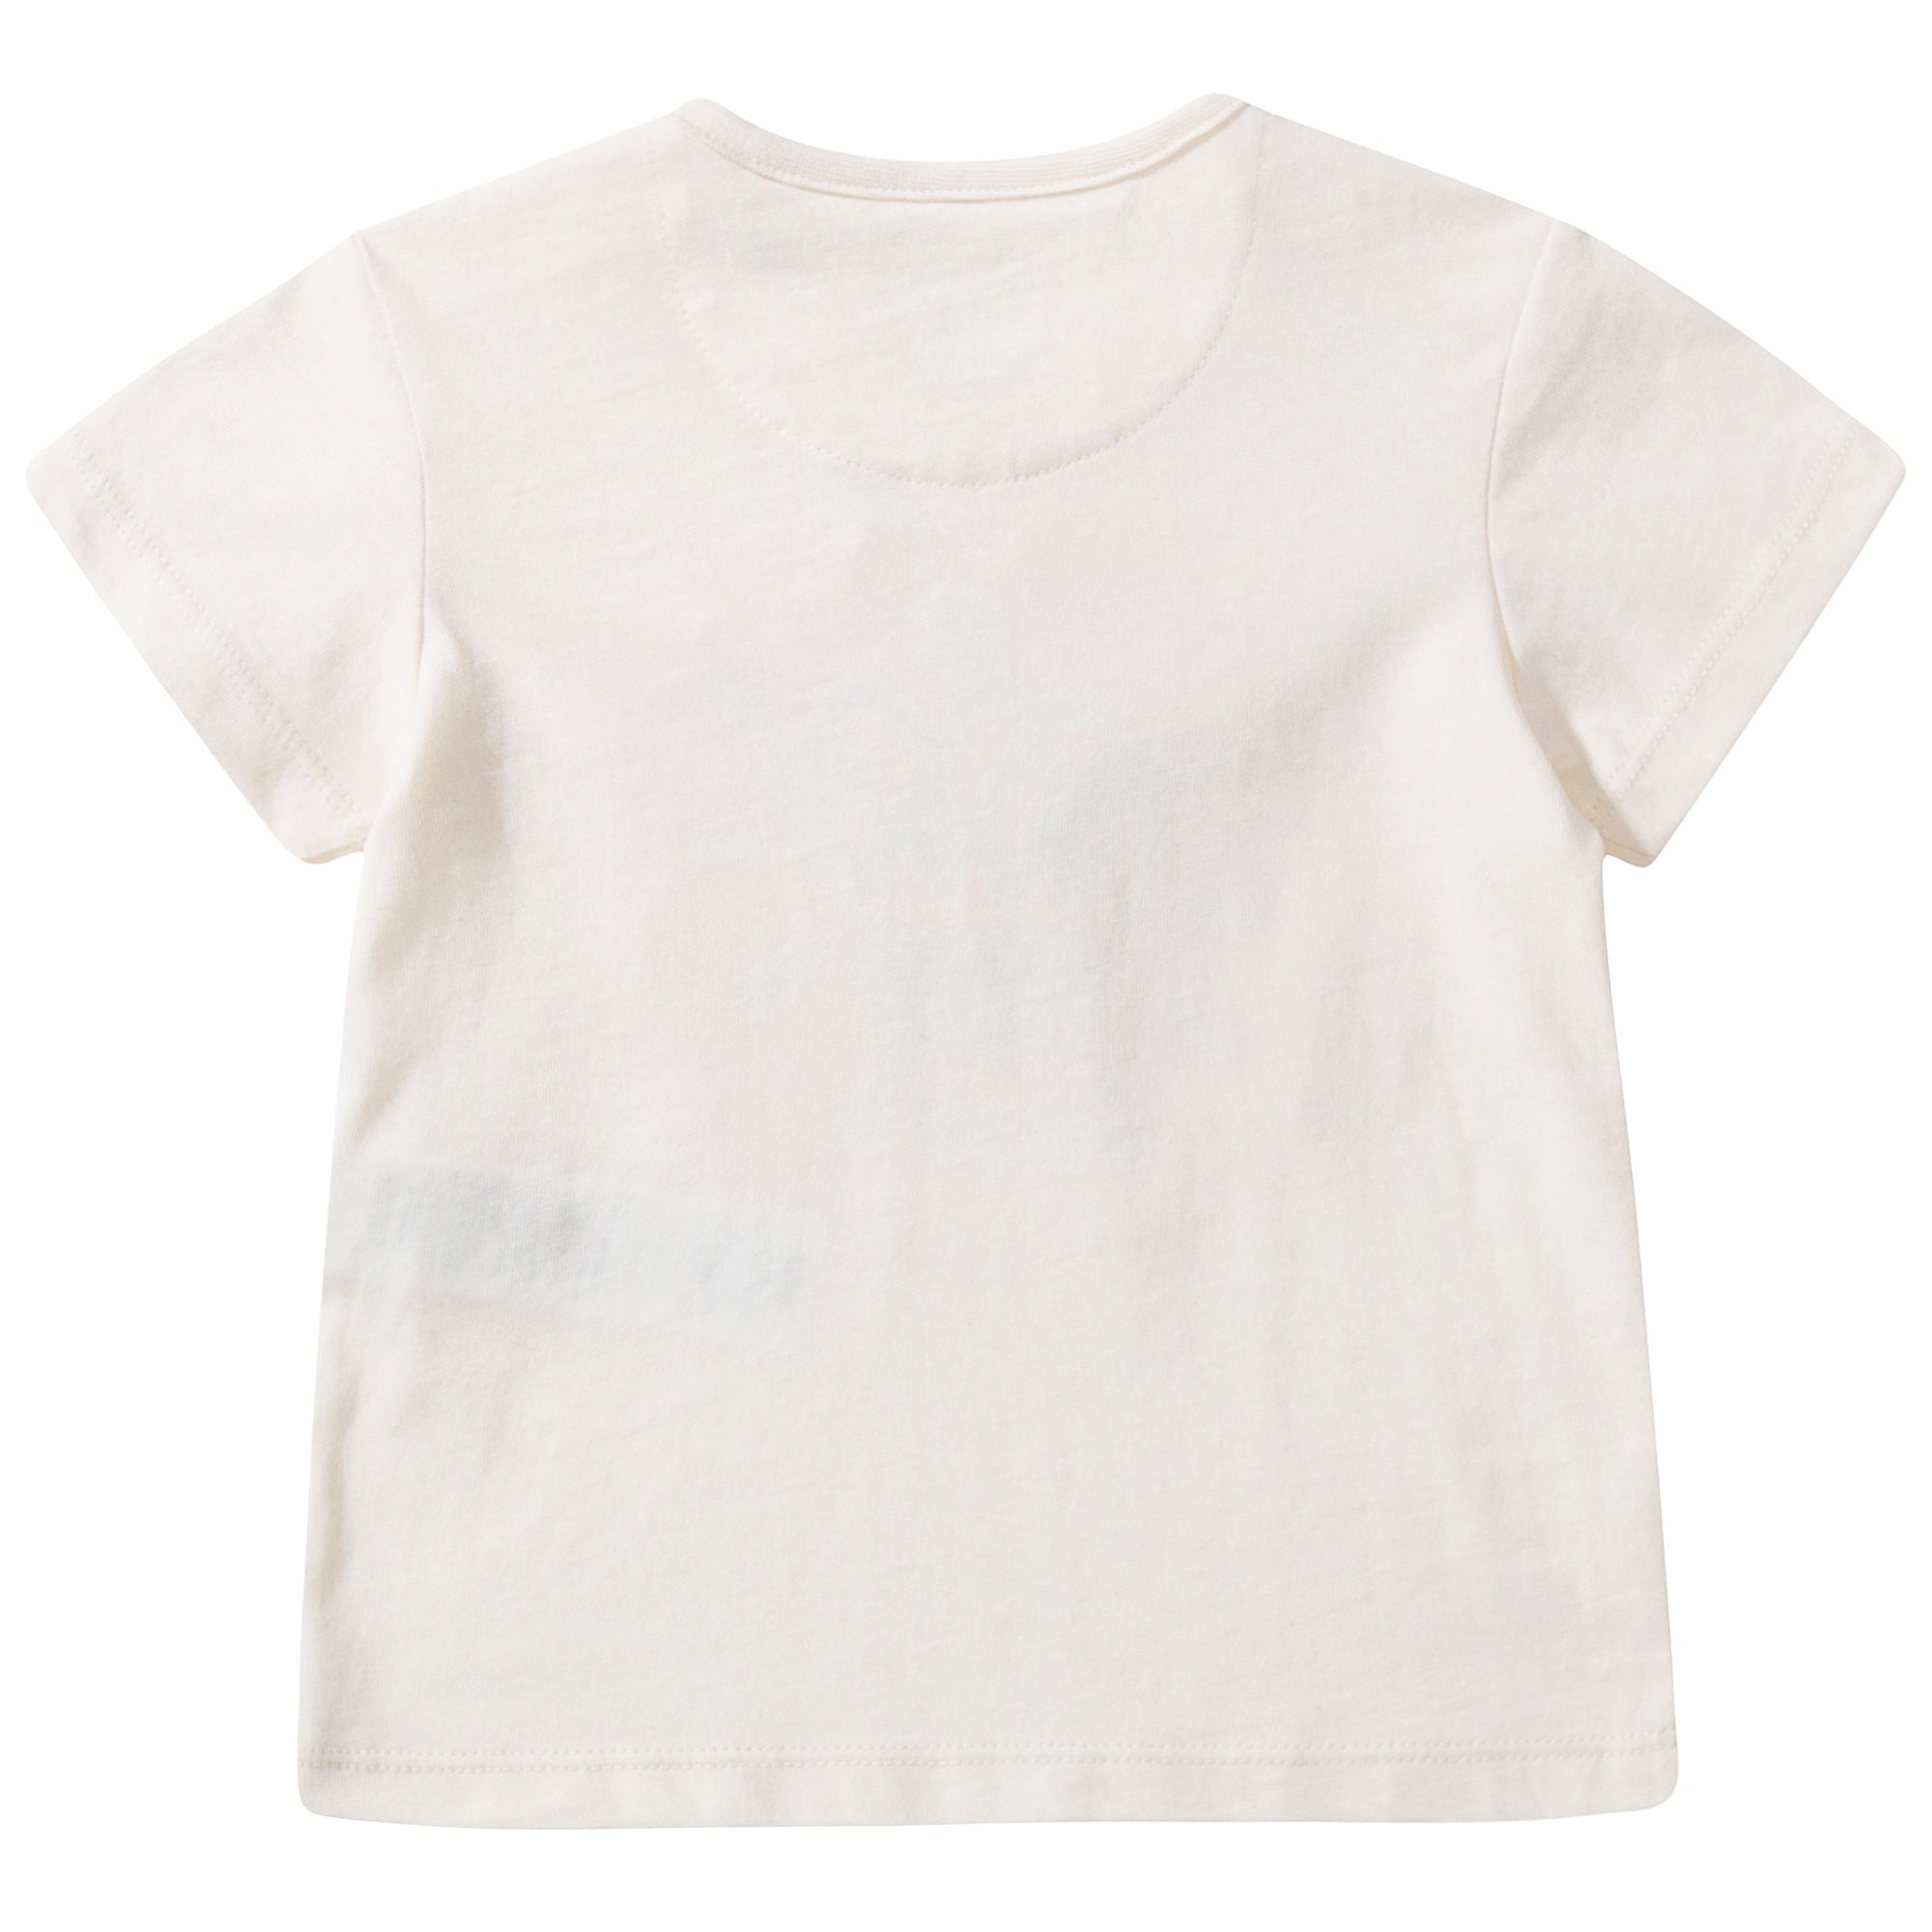 Baby  Girls  Natural  White  Cotton   T-shirt